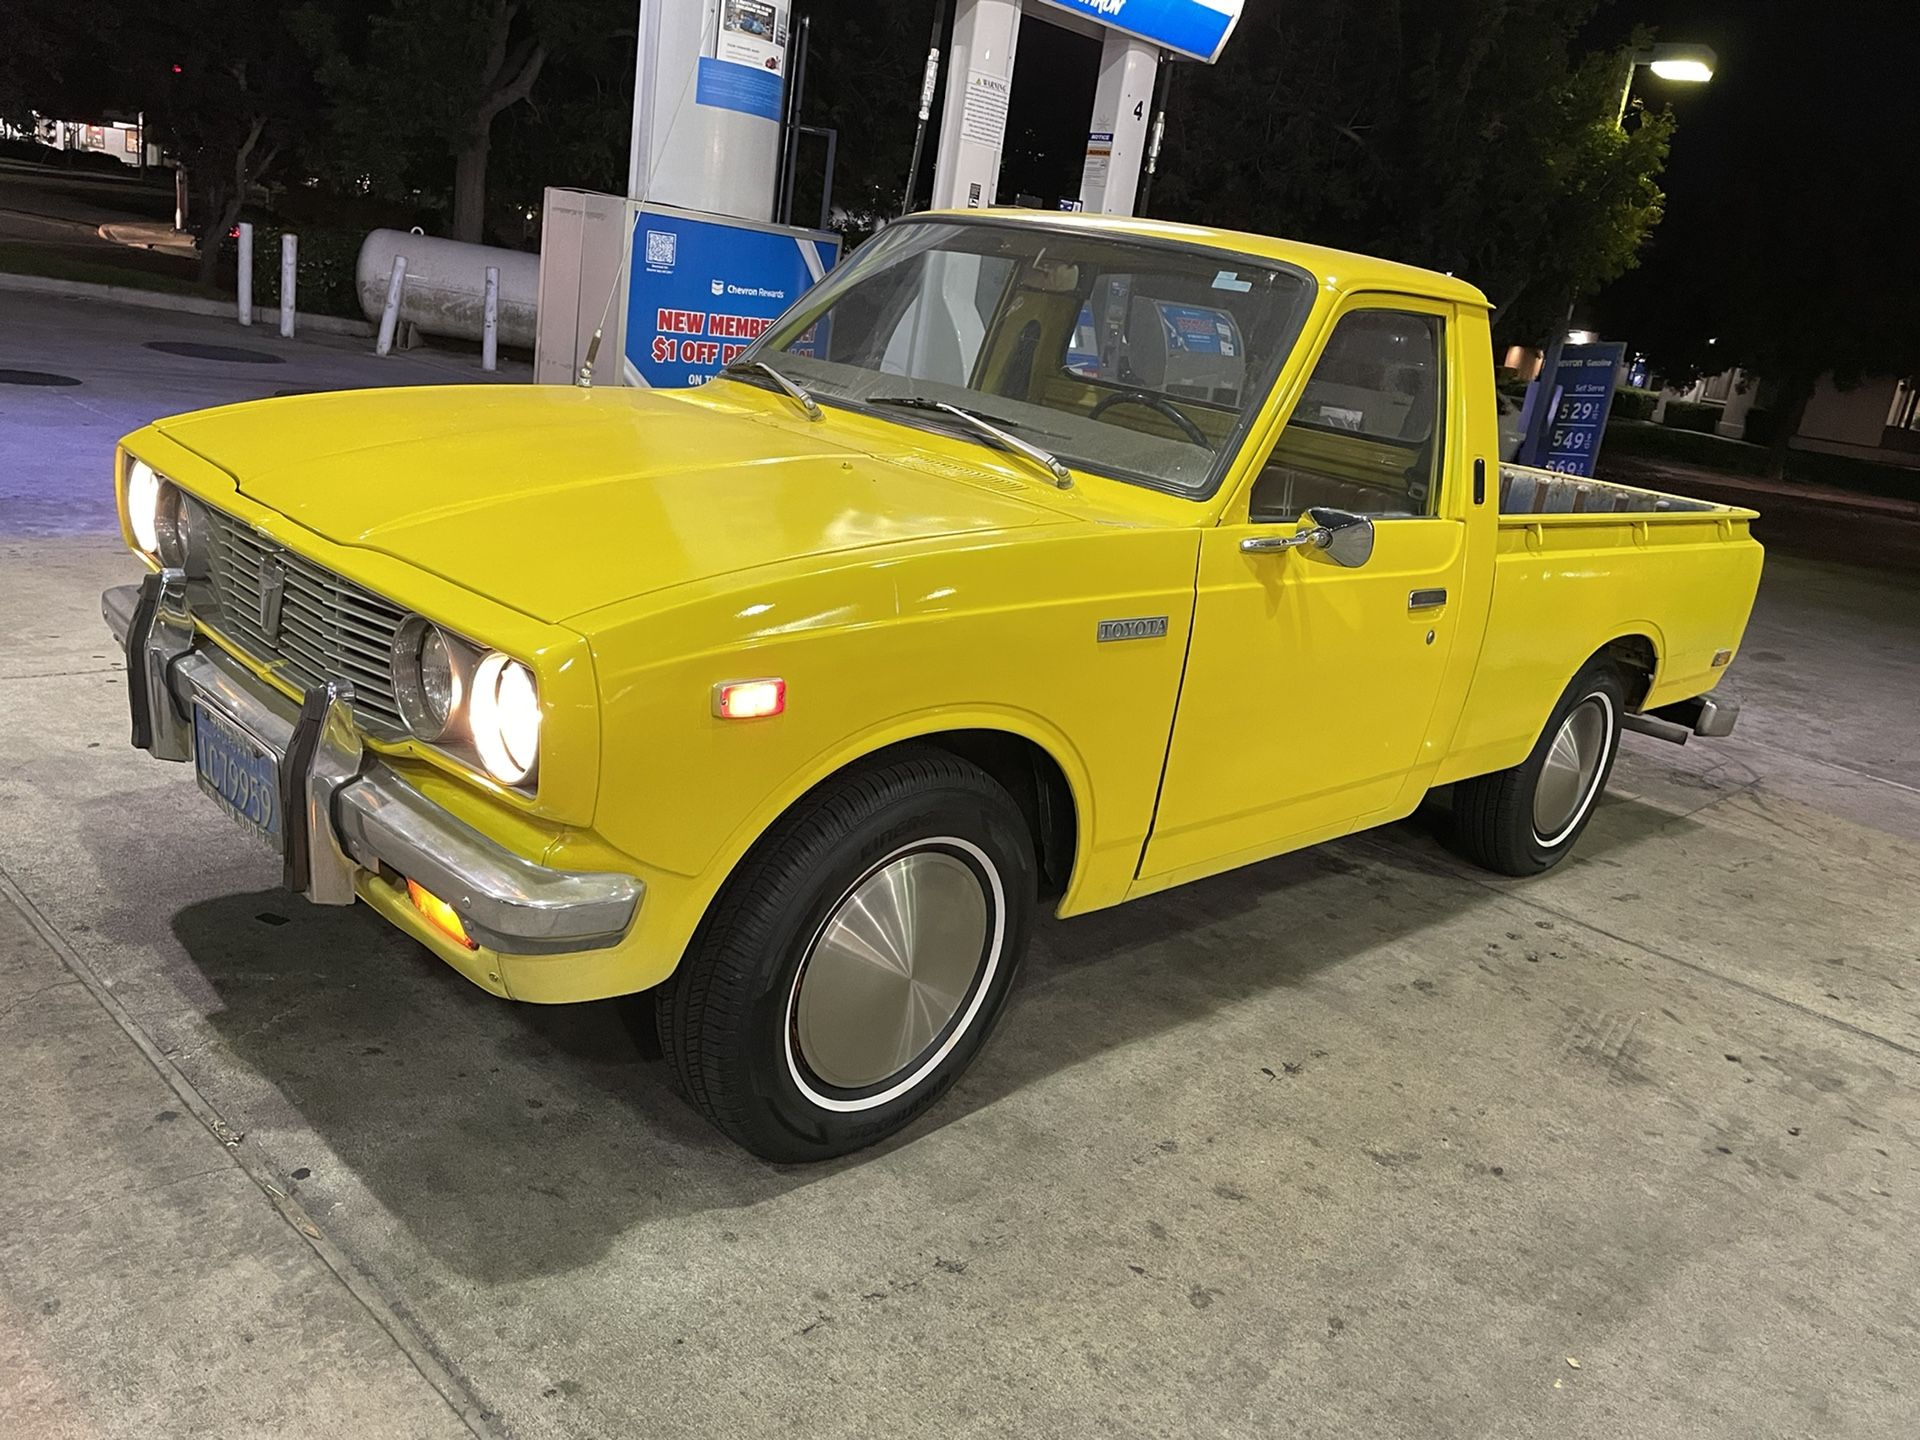 1976 Toyota Corona